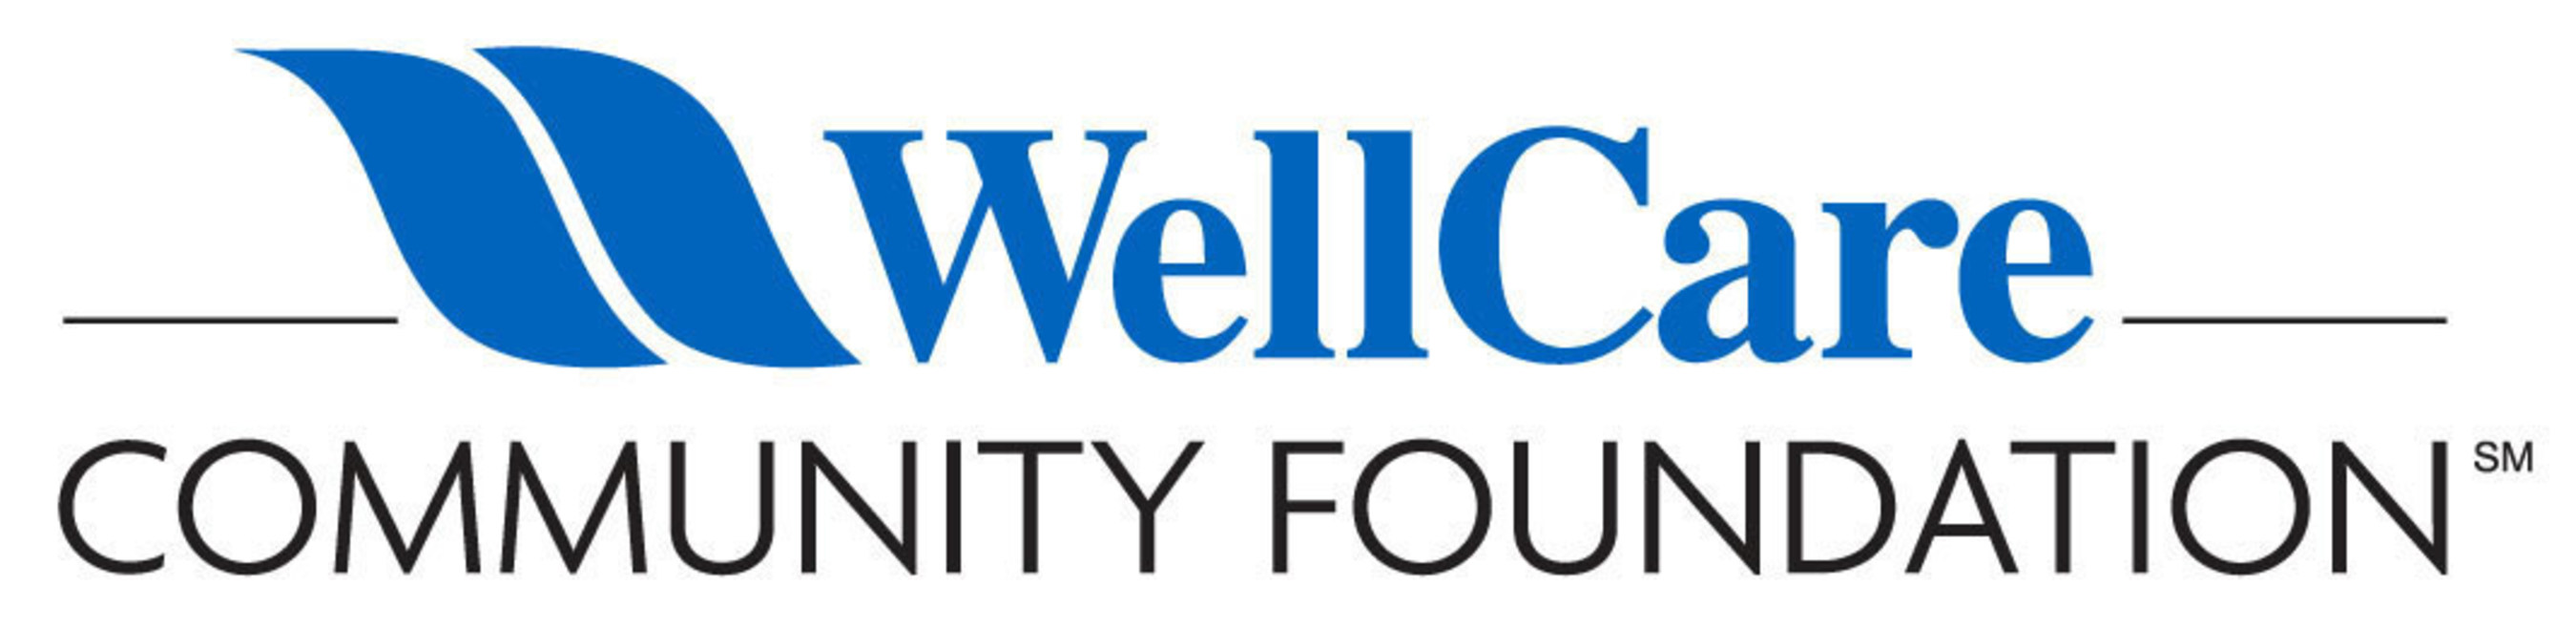 WellCare Community Foundation Logo (PRNewsFoto/WellCare Health Plans, Inc.)